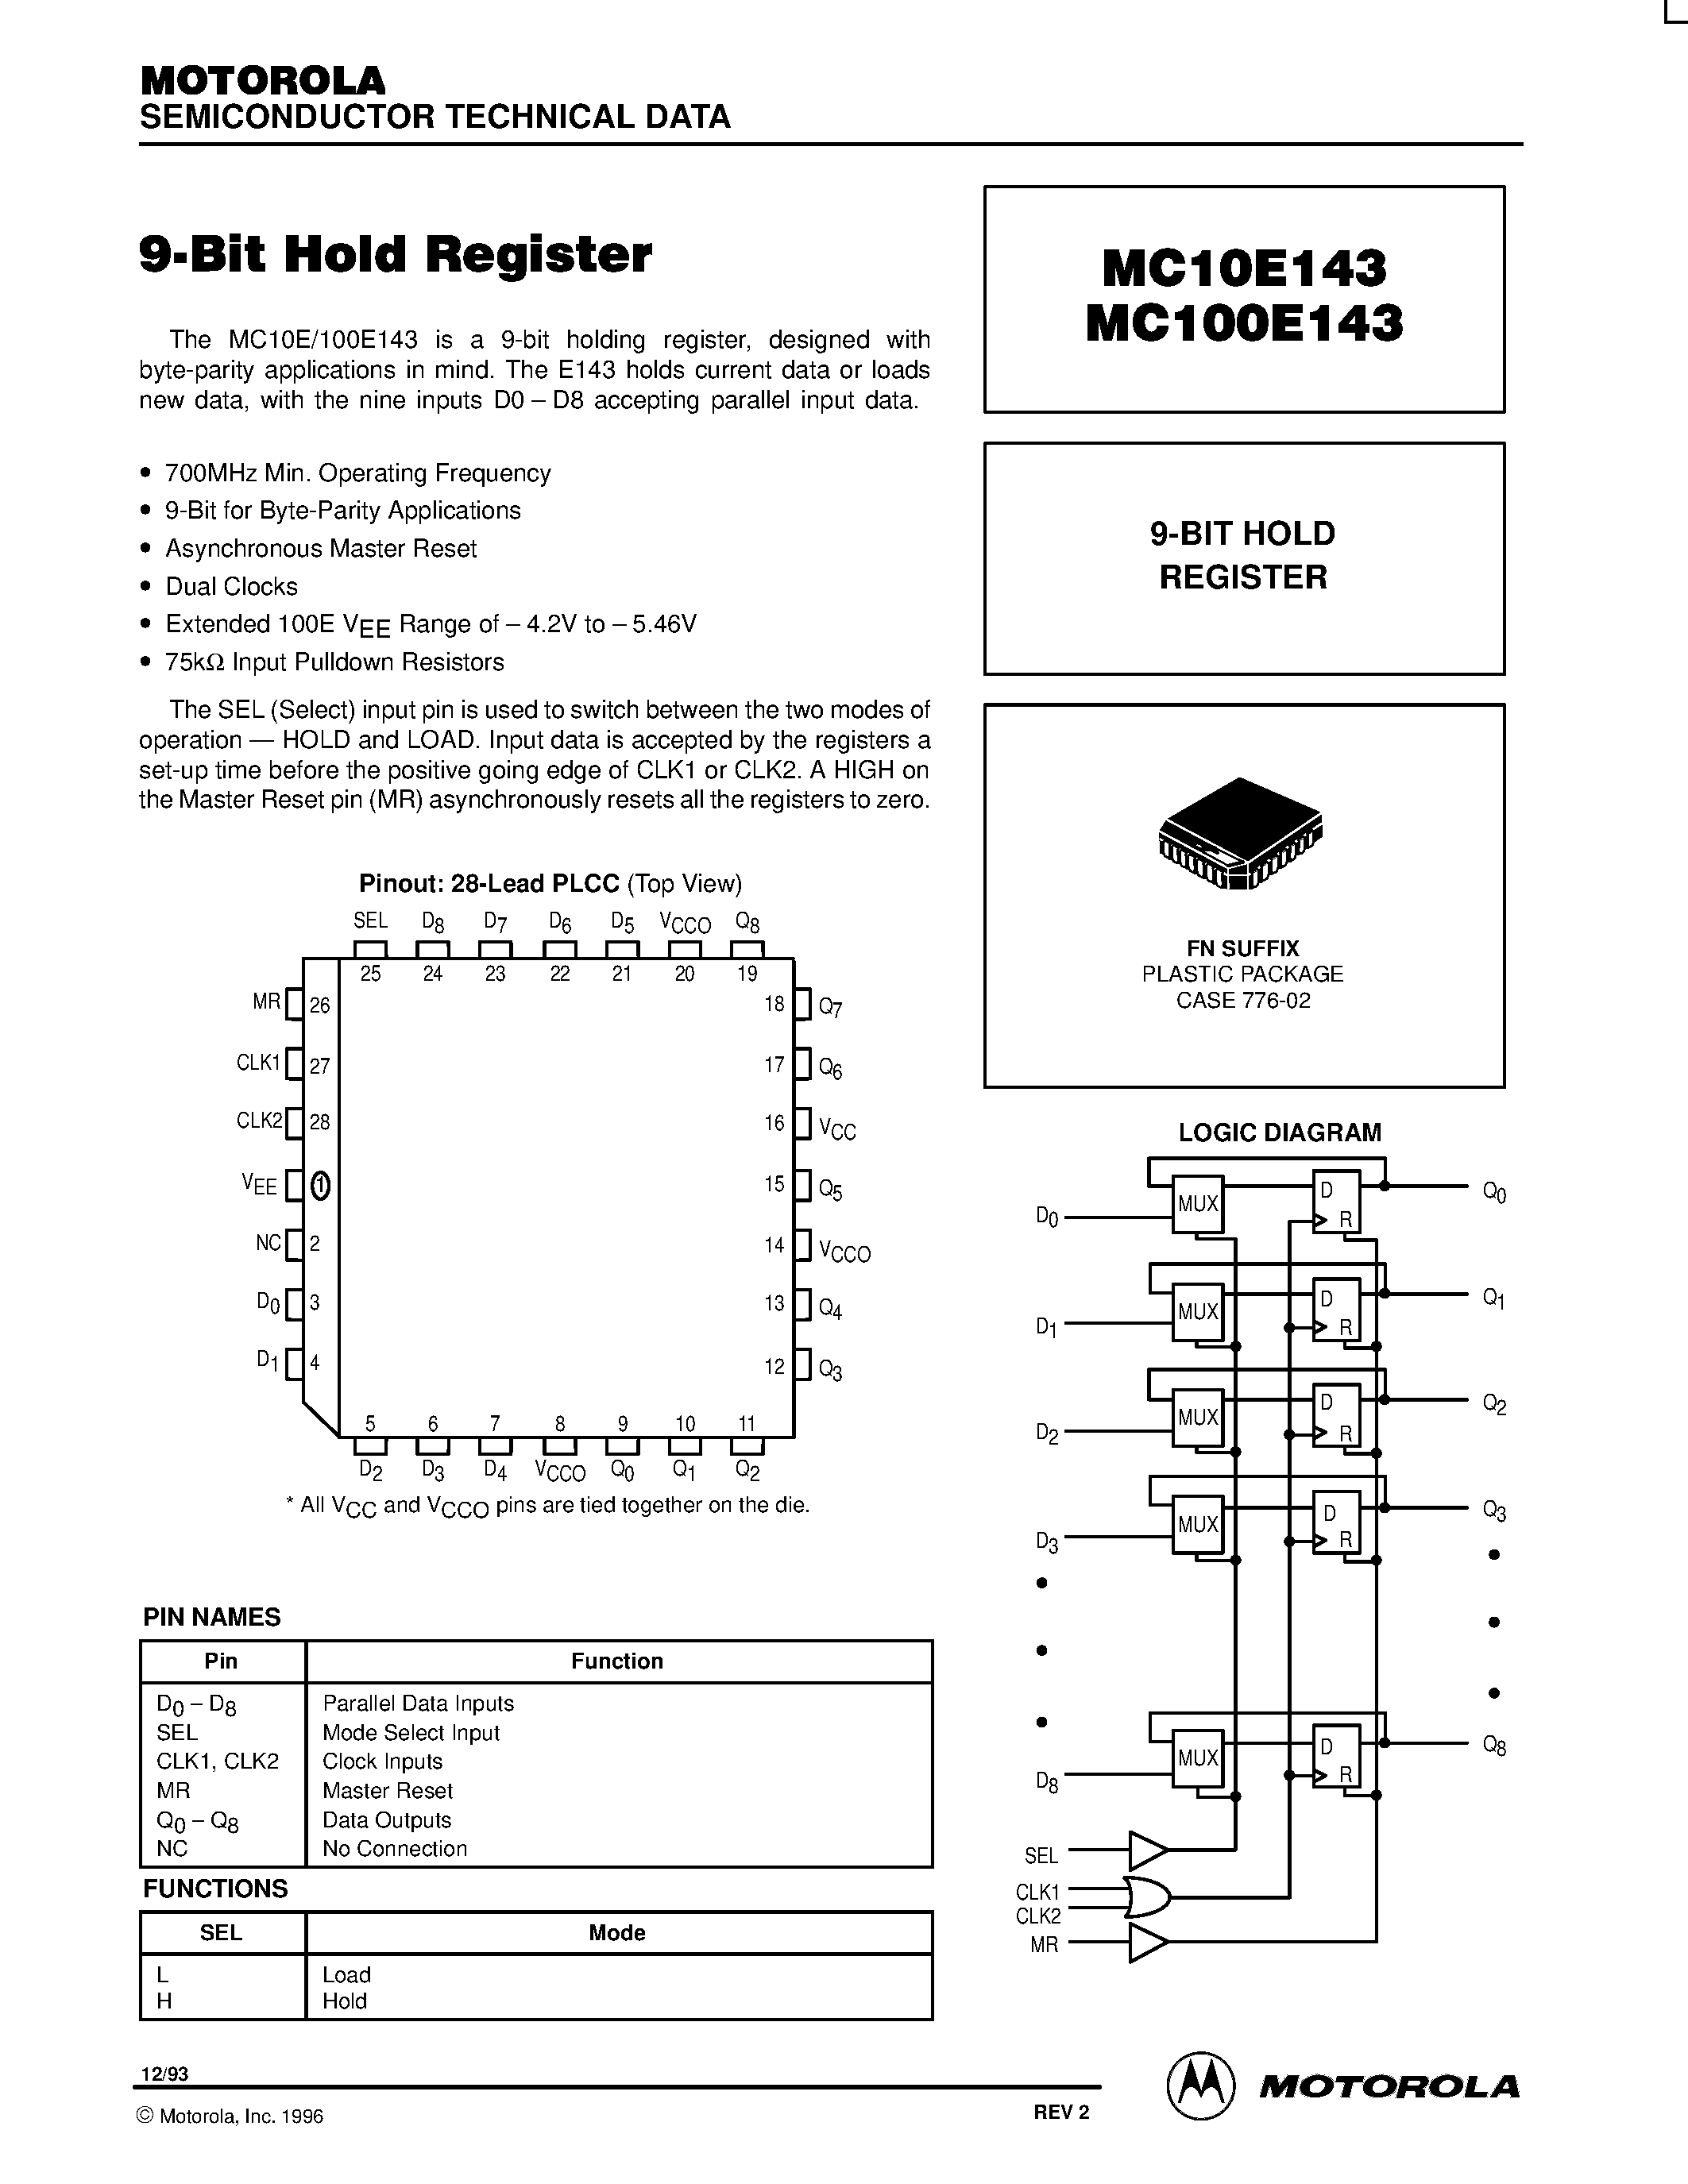 Datasheet MC100E143FN - 9-BIT HOLD REGISTER page 1